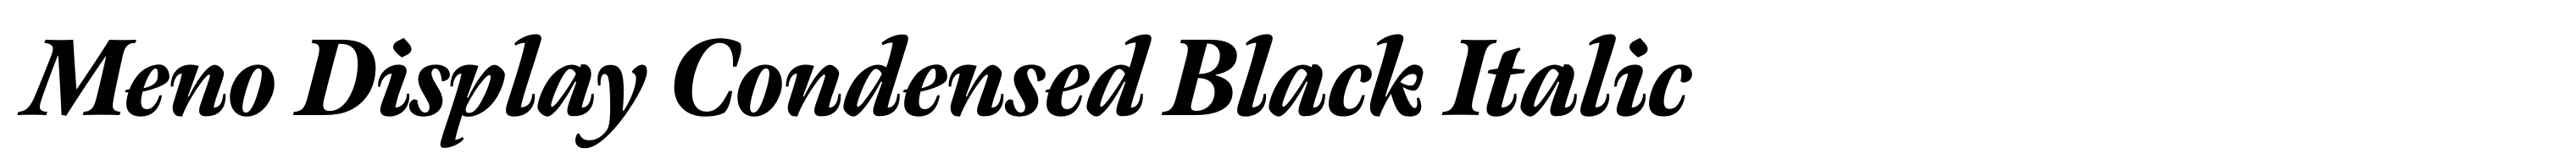 Meno Display Condensed Black Italic